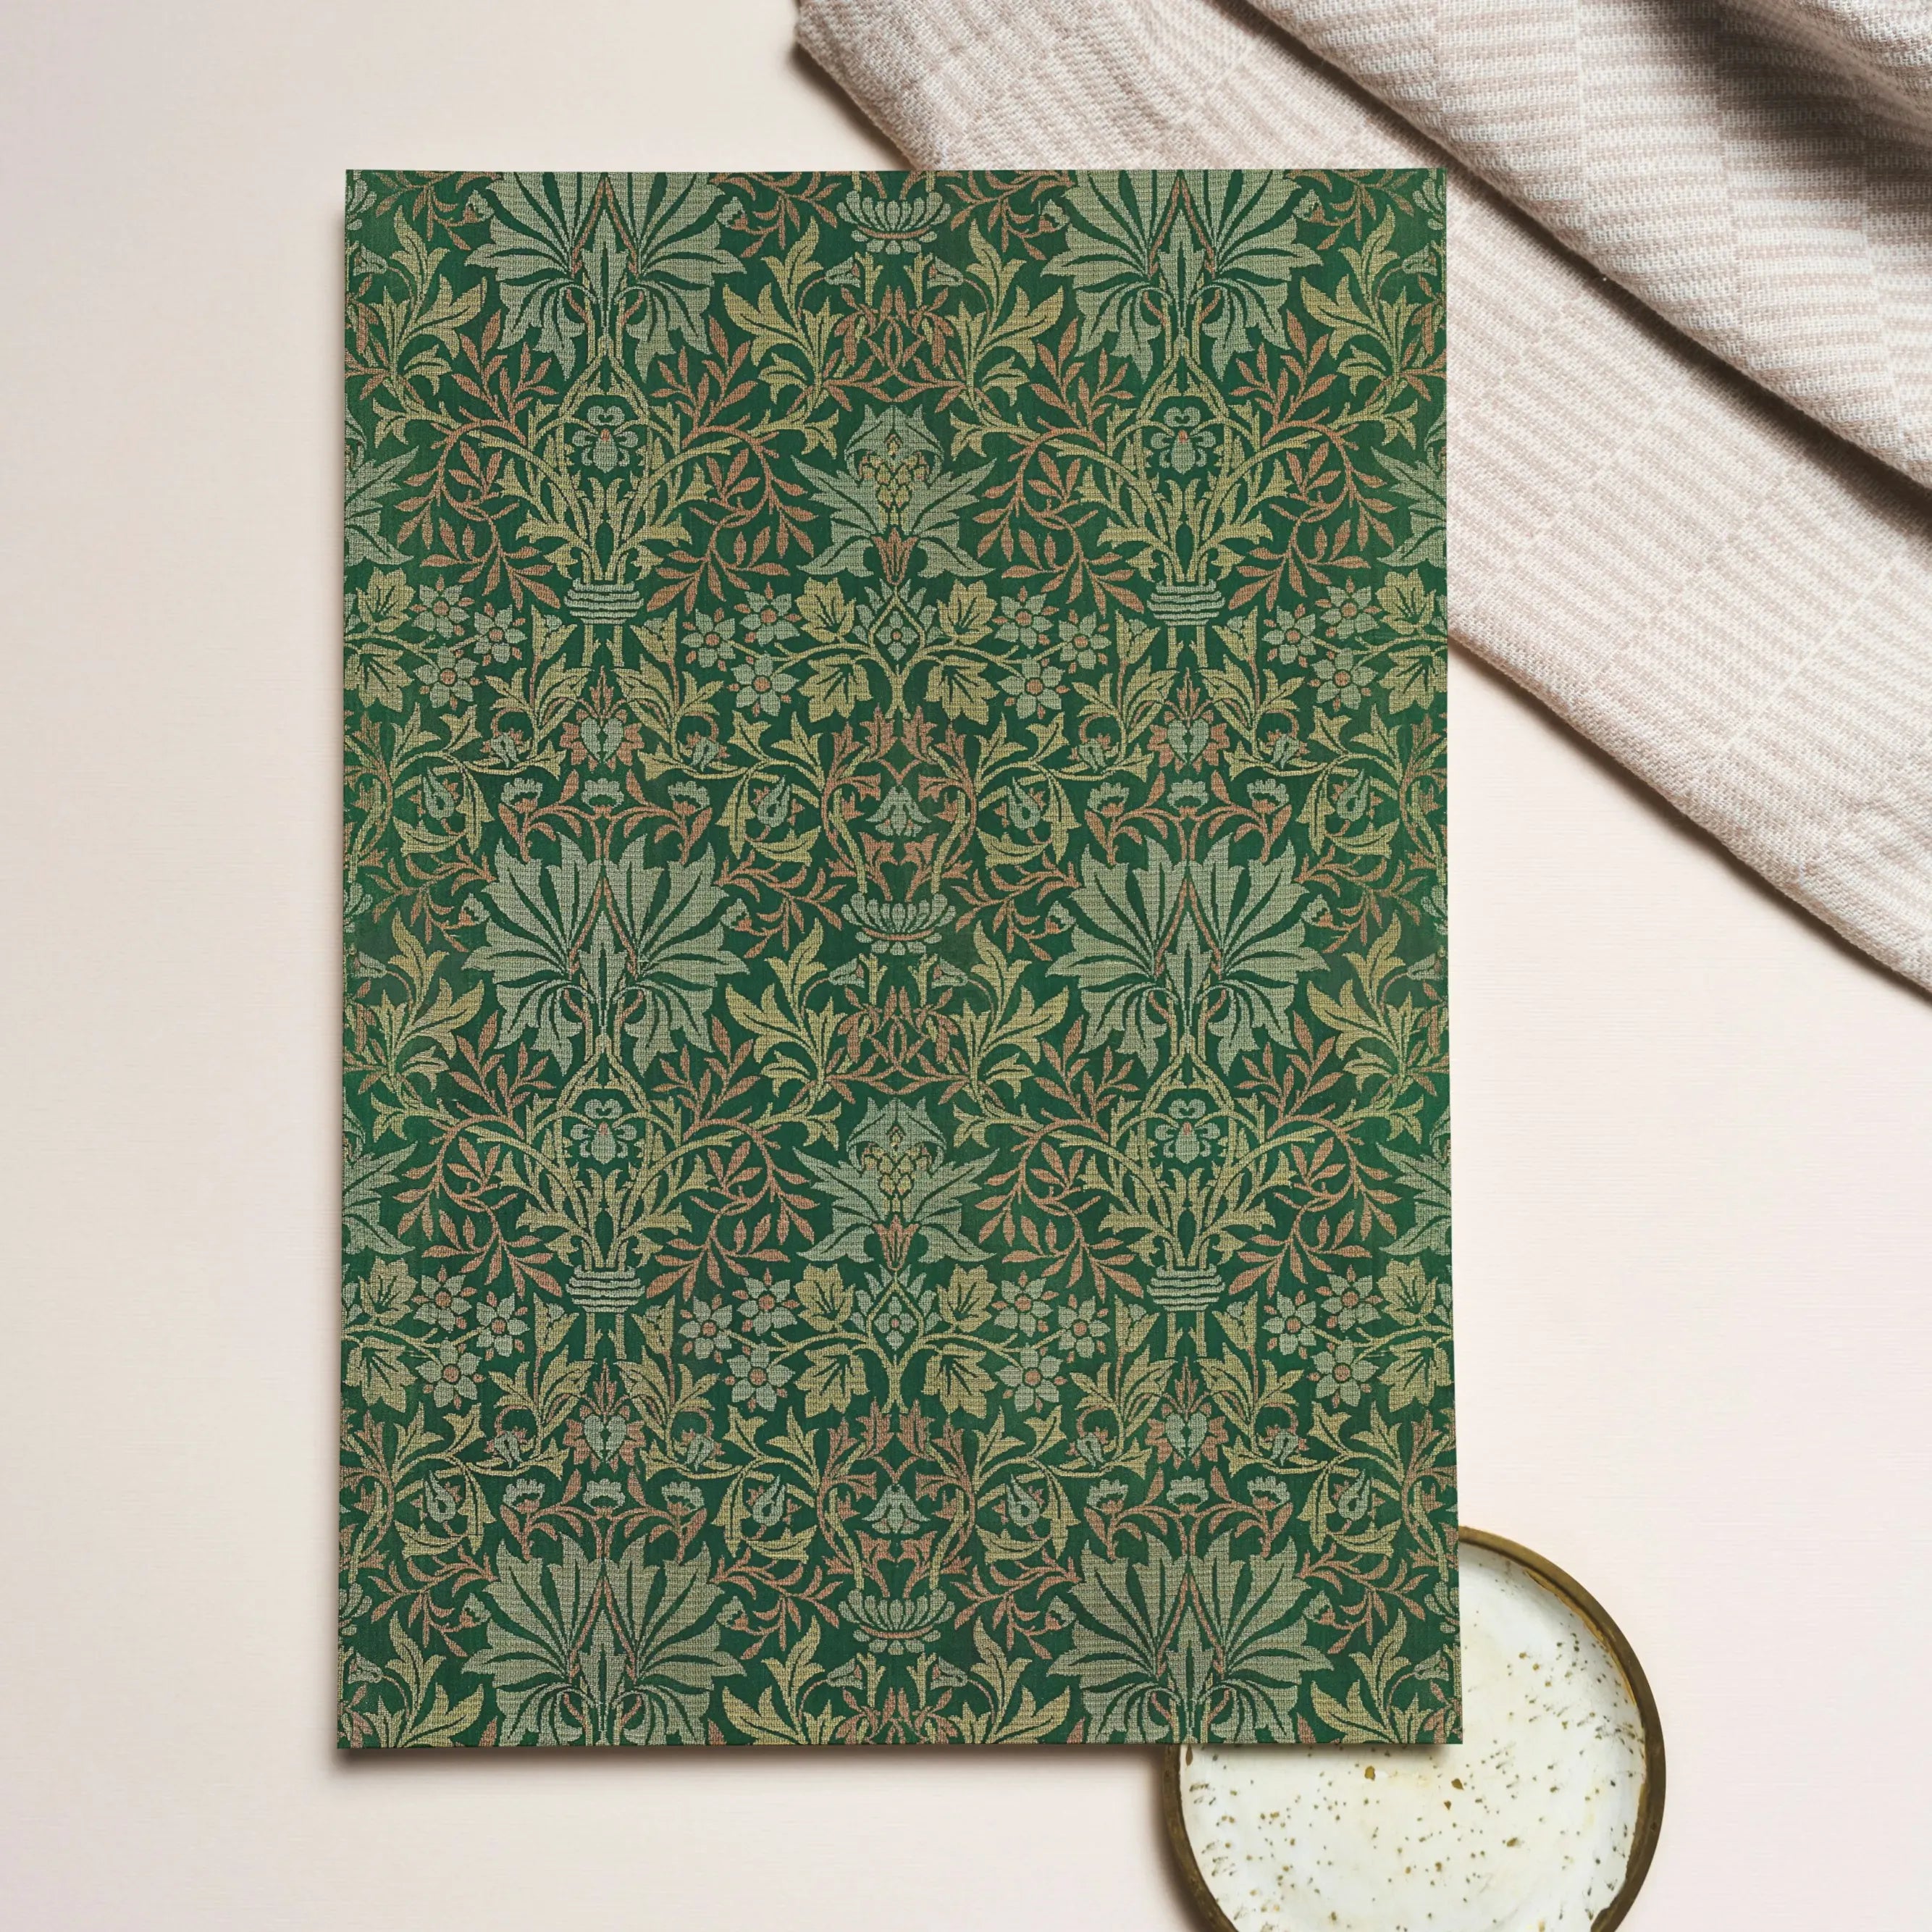 Flower Garden - William Morris Pattern Art Greeting Card - Greeting & Note Cards - Aesthetic Art